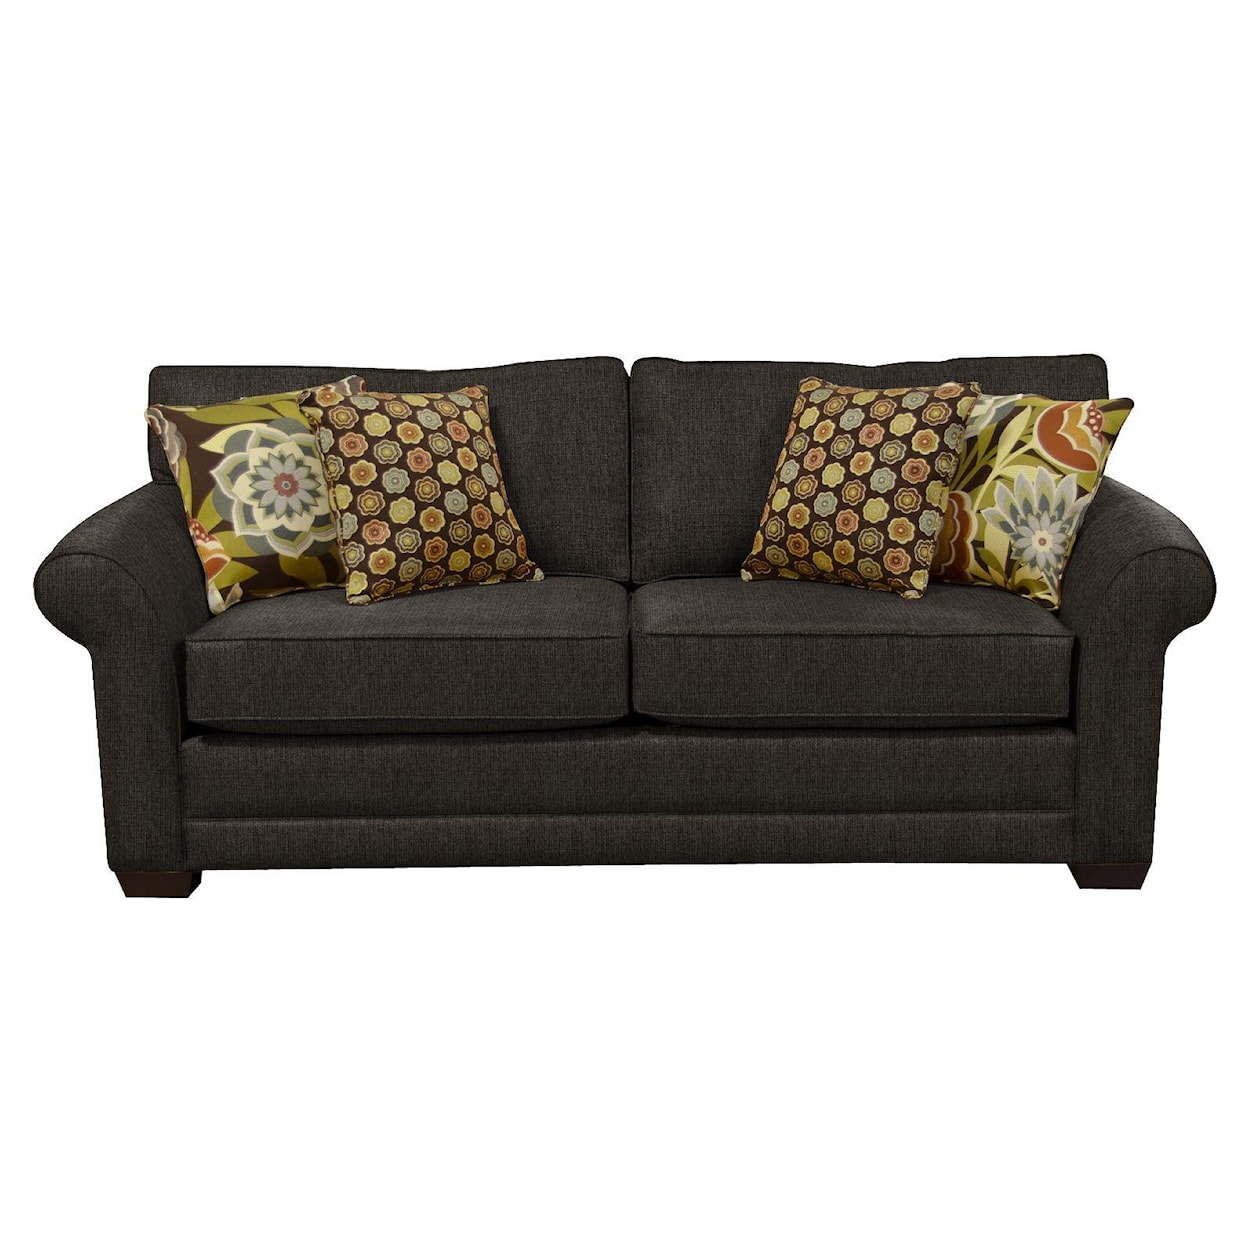 England Gent Upholstered Stationary Sofa